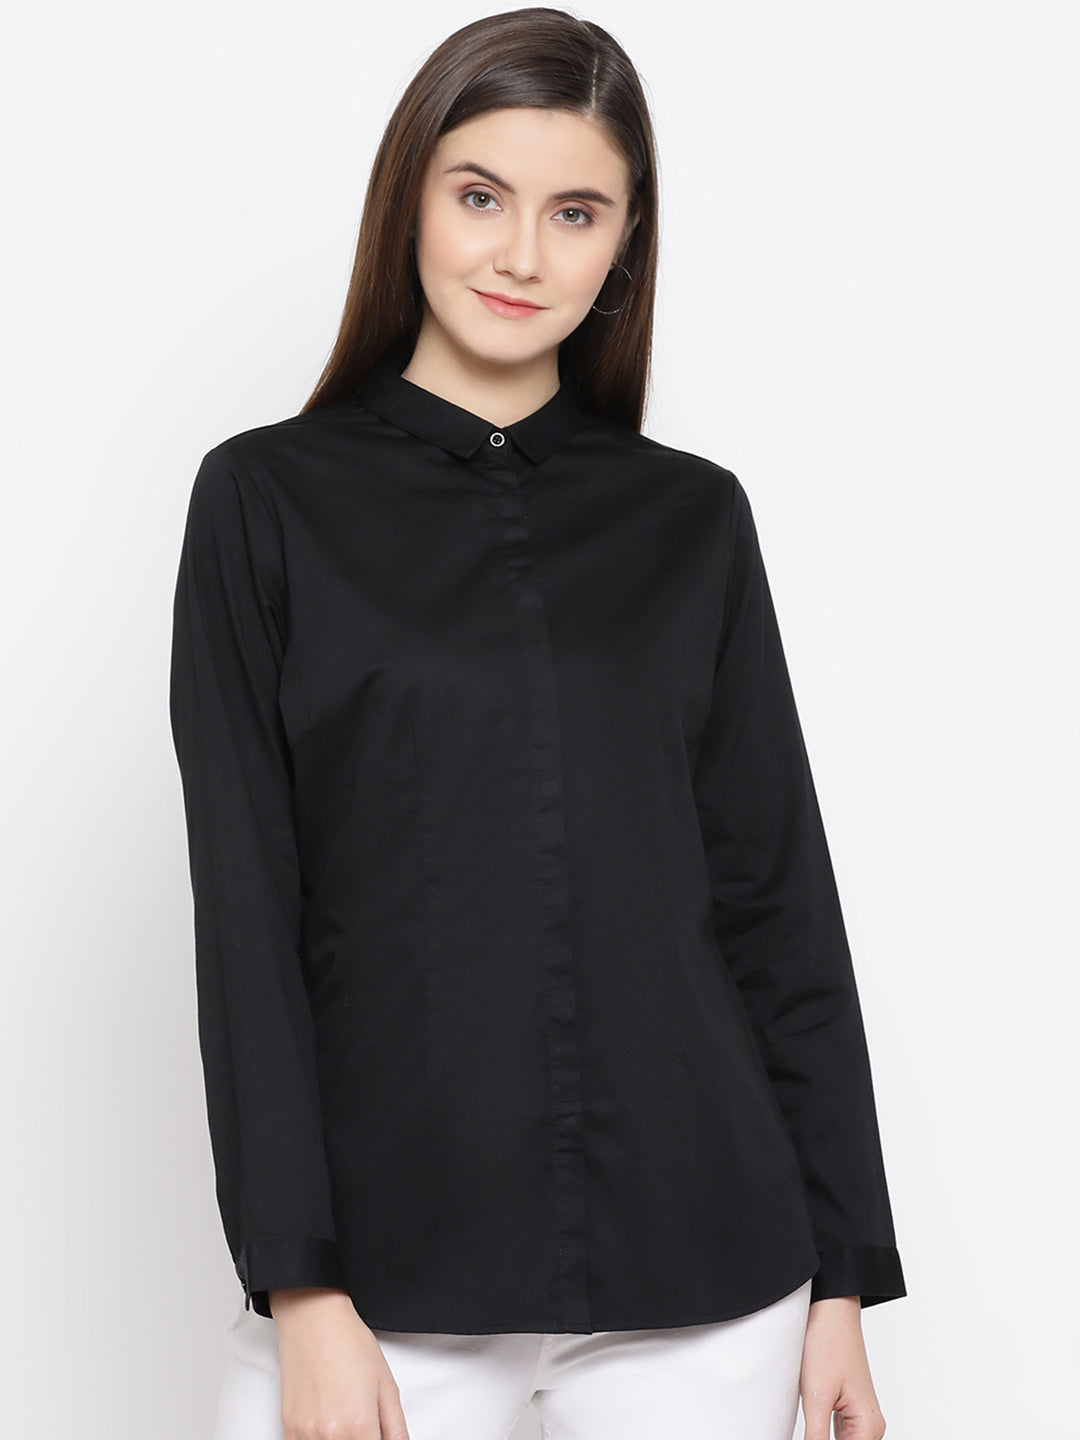 Black Button up Shirt - Women Shirts